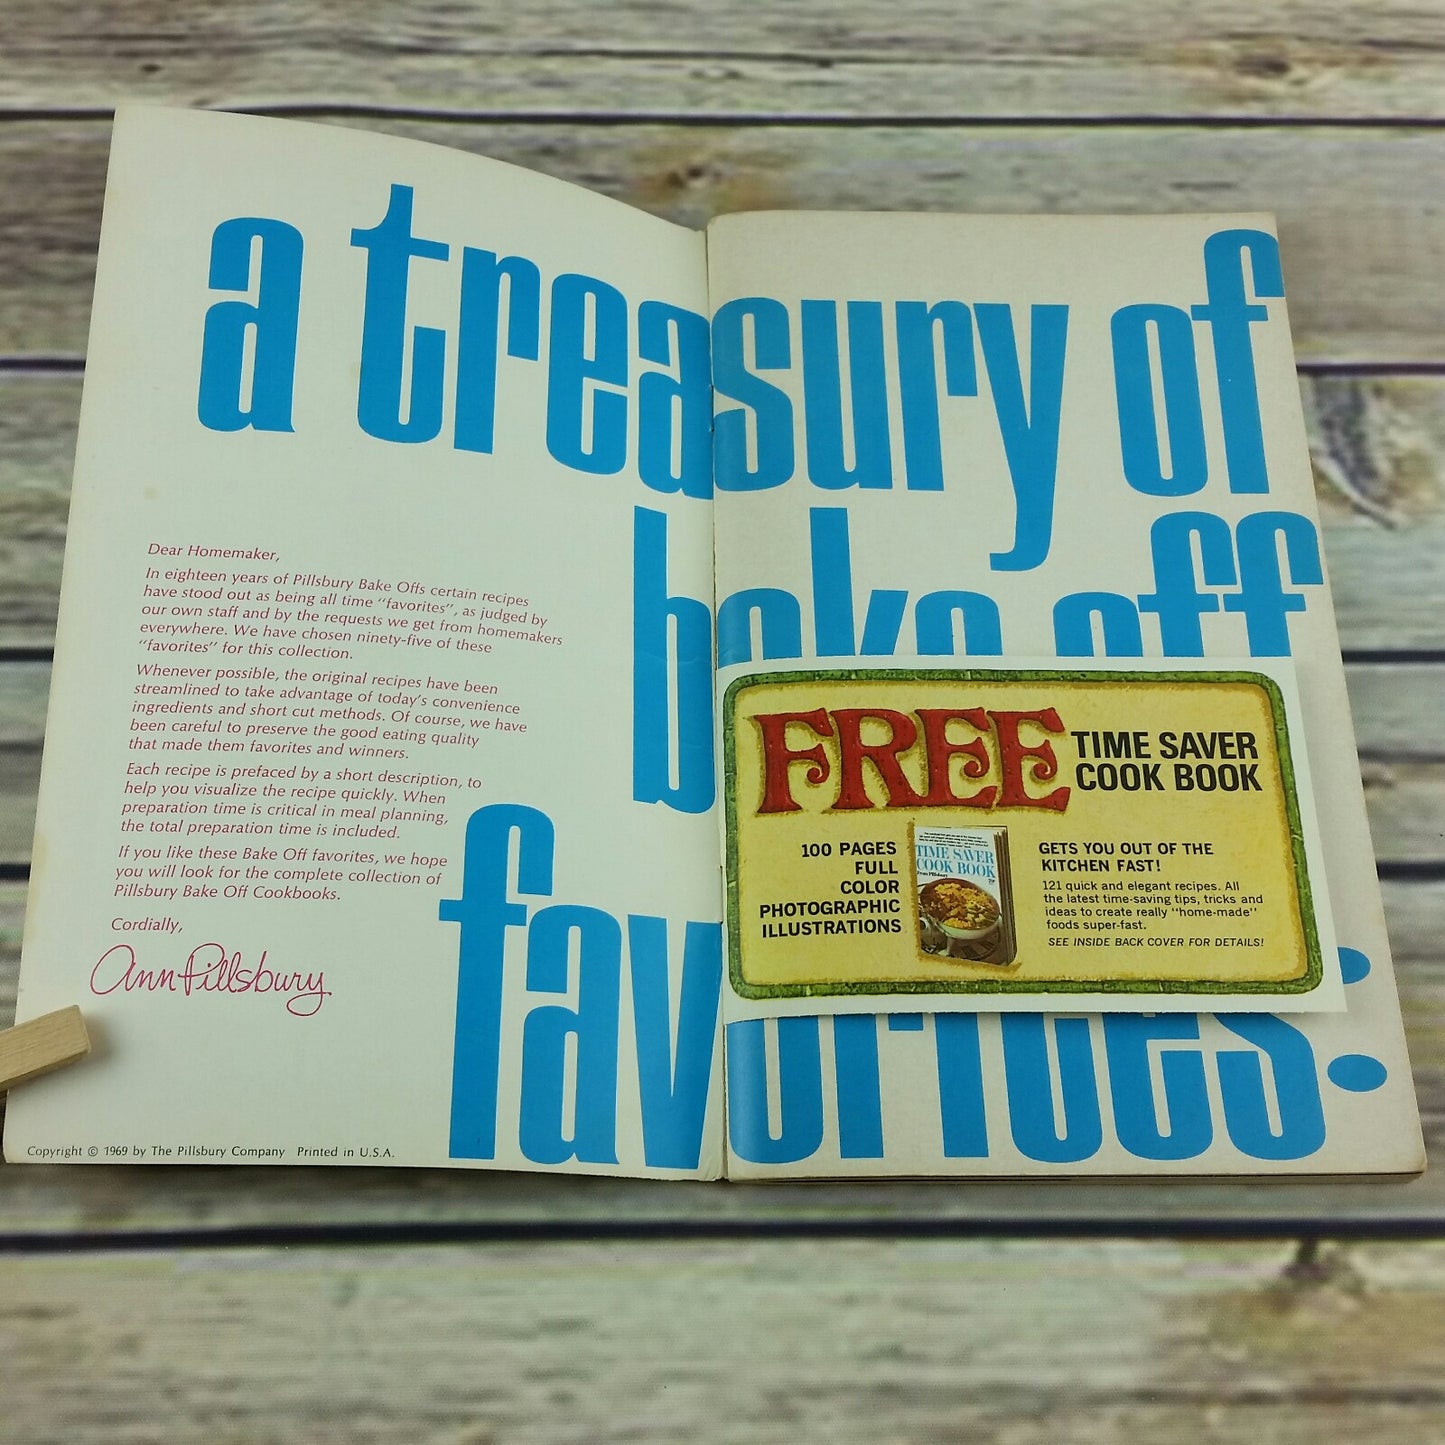 Vintage Pillsbury Cookbook A Treasury of Bake Off Favorite Recipes 1969 Paperback Booklet - At Grandma's Table